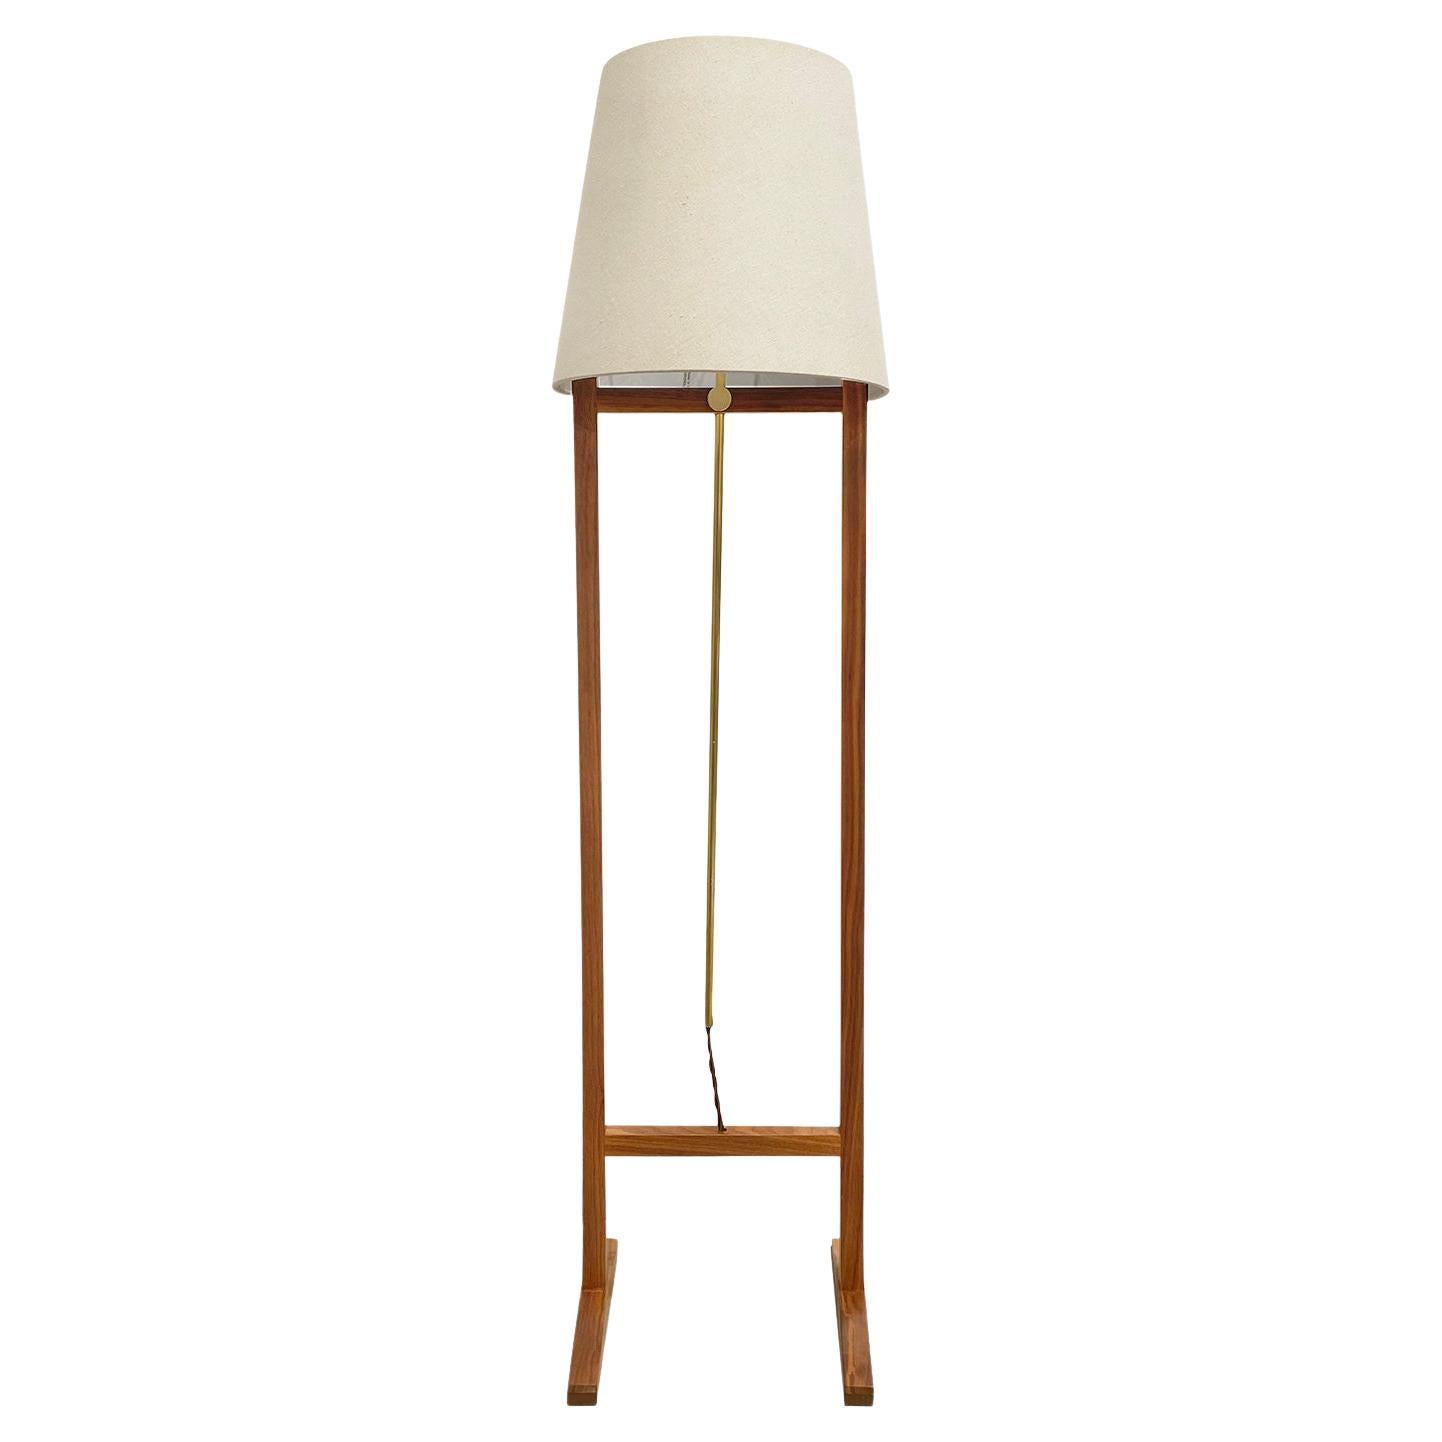 20th Century Swedish Svenskt Tenn Walnut Floor Lamp, Brass Light by Josef Frank For Sale